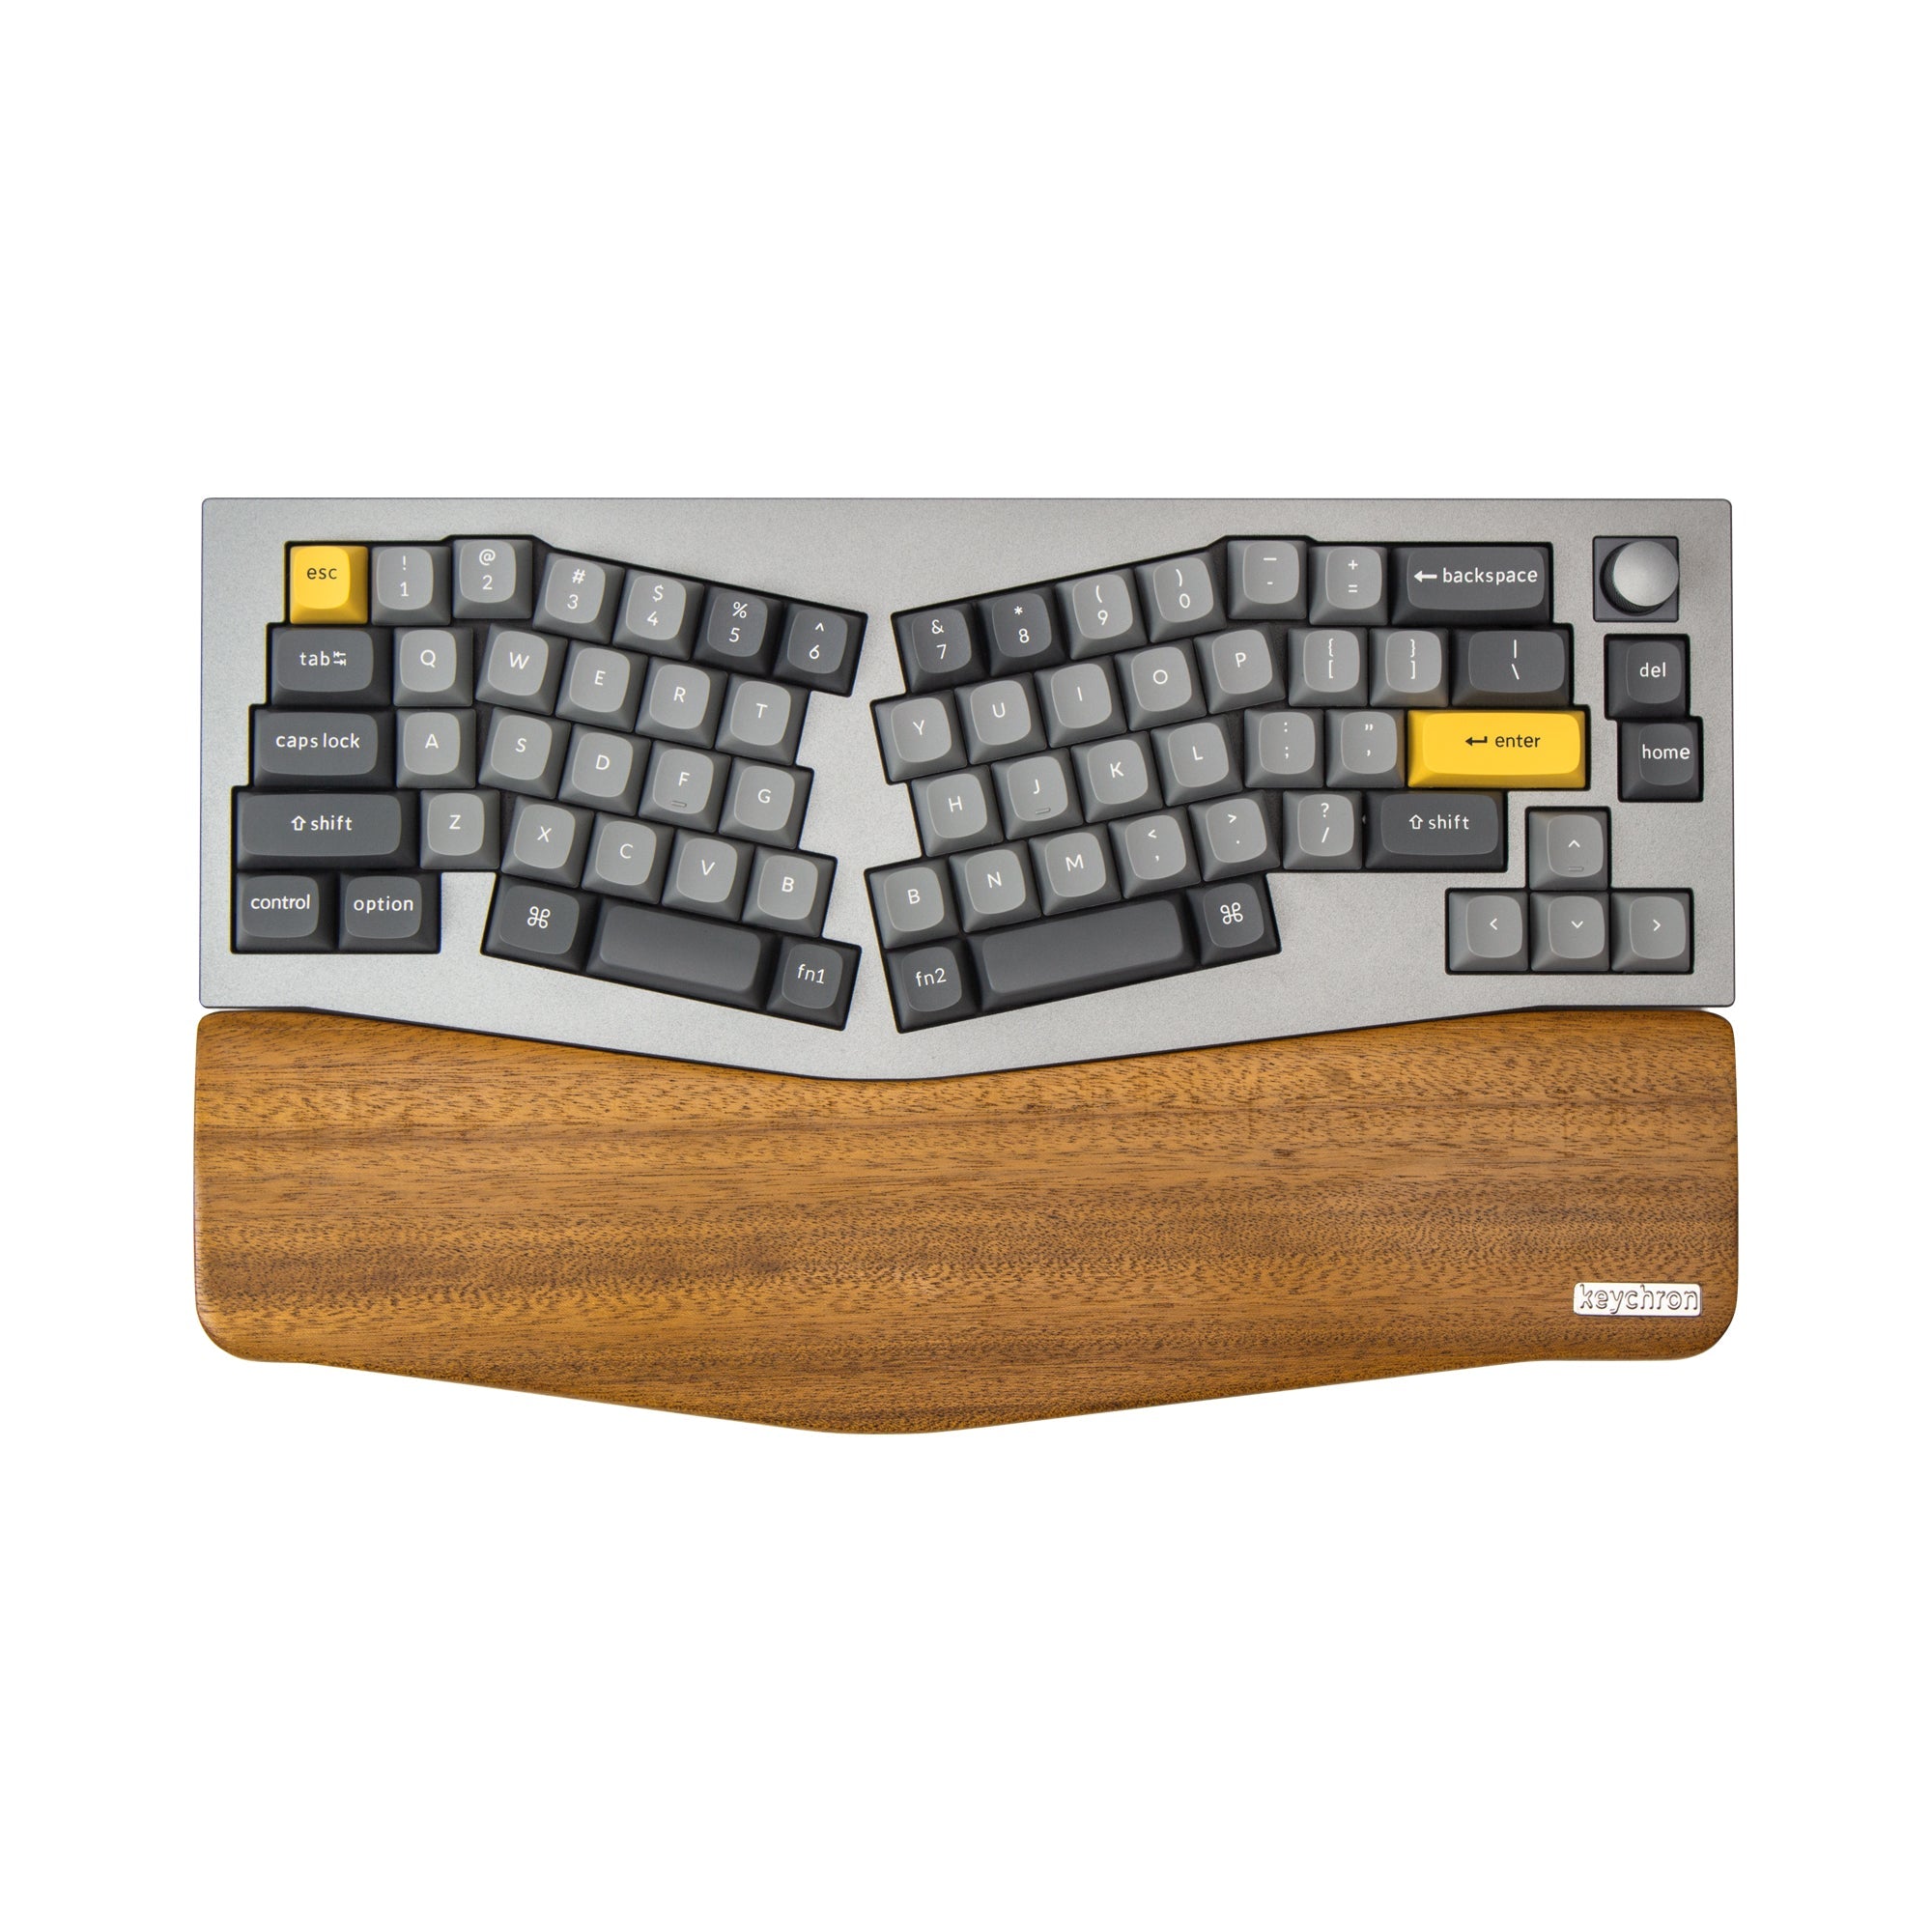 Keychron Keyboard Wooden Palm Rest